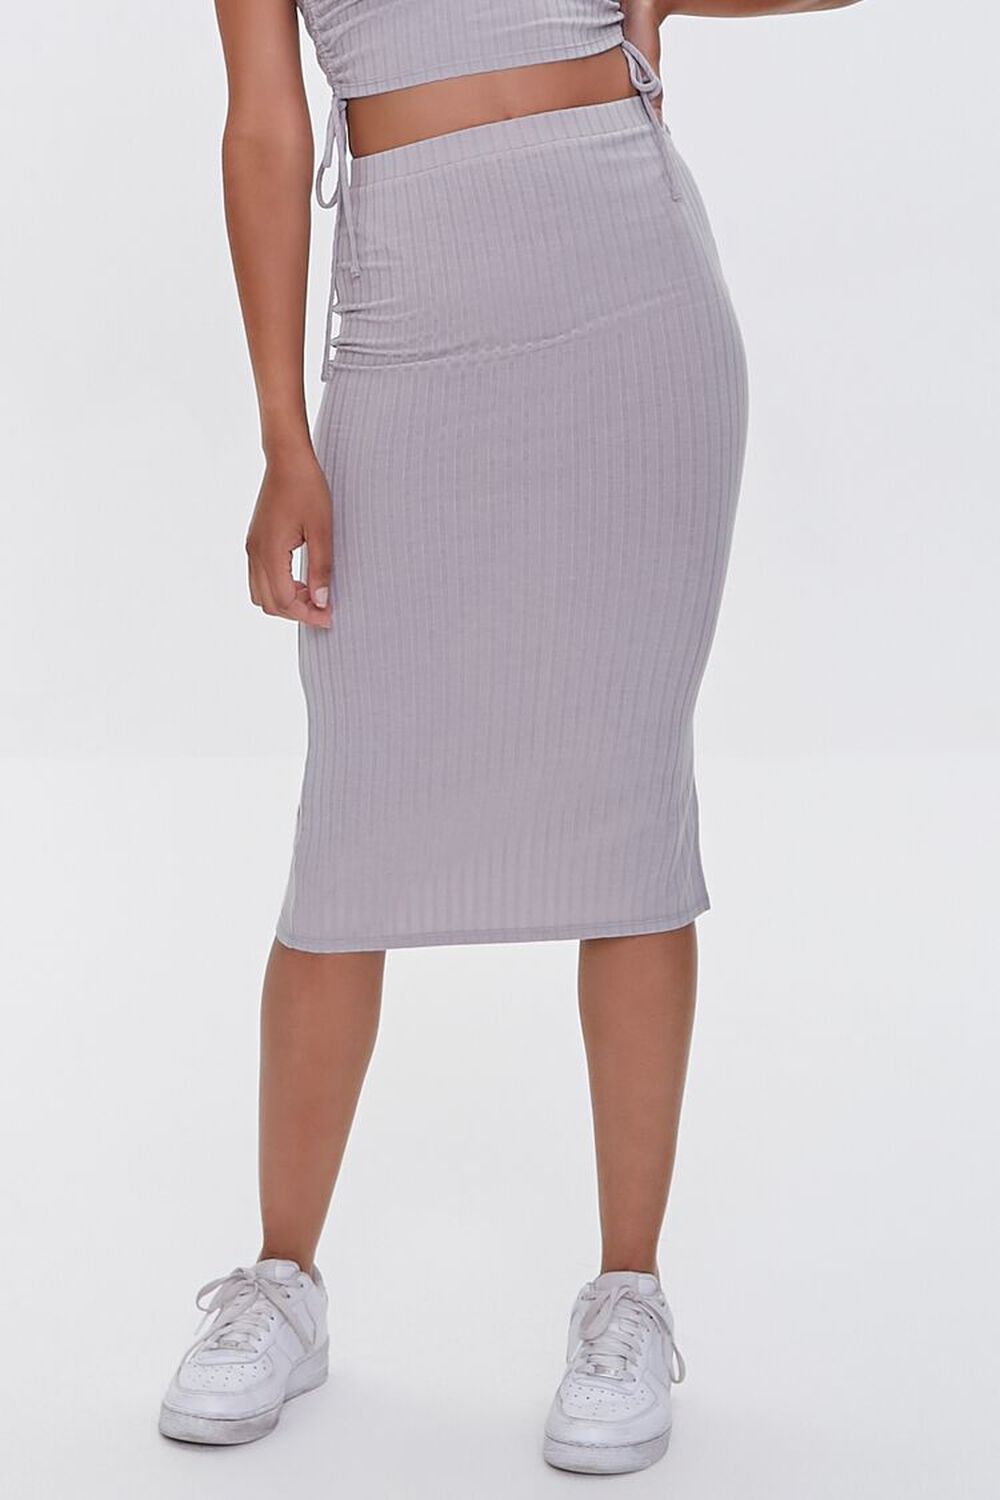 Cropped Cami & Skirt Set